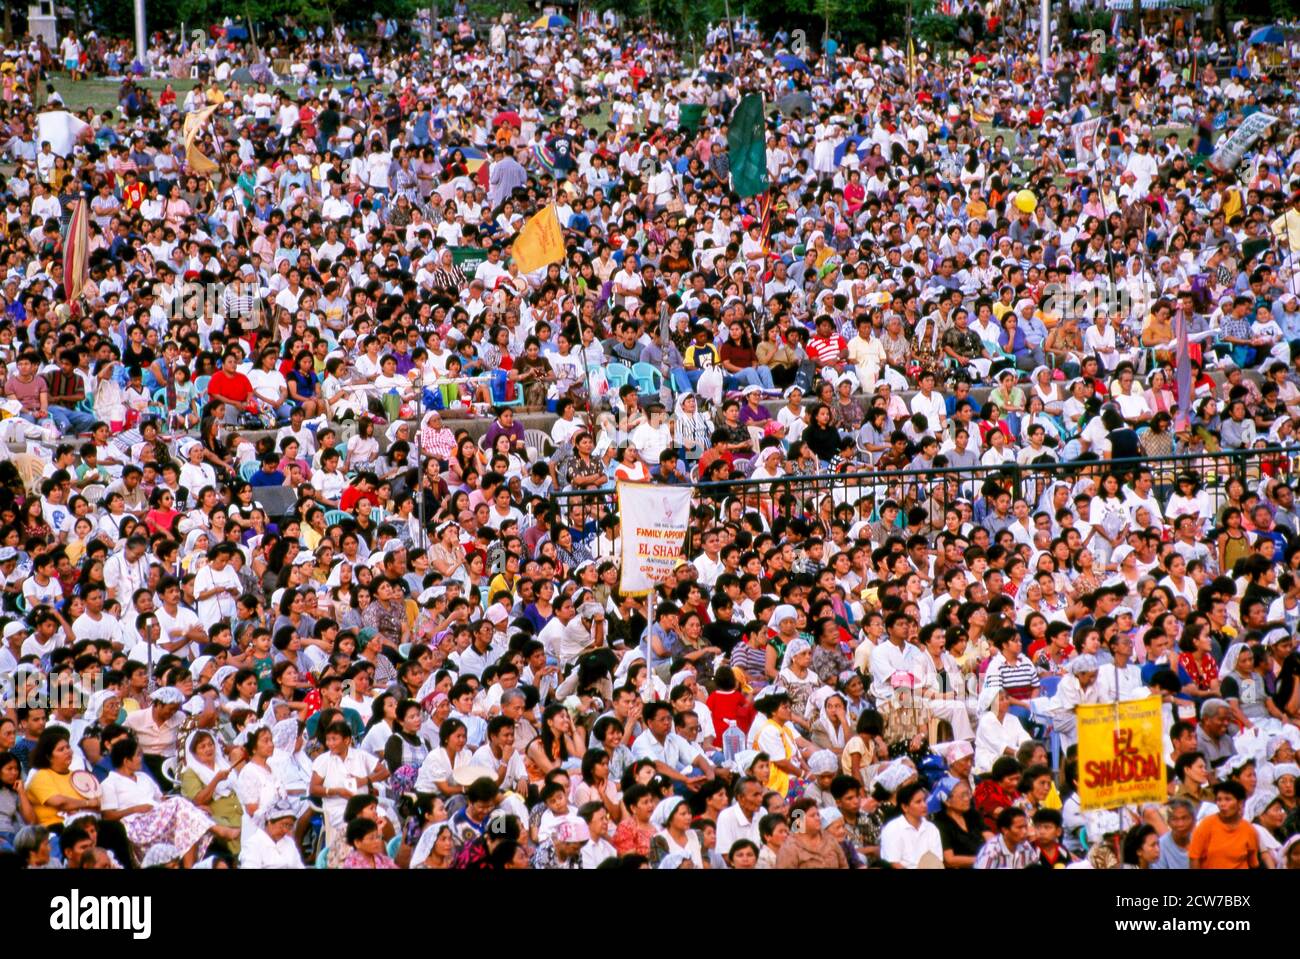 El Shaddai mass gathering for Easter at Quirino Grandstand, Rizal Park, Manila, Philippines Stock Photo